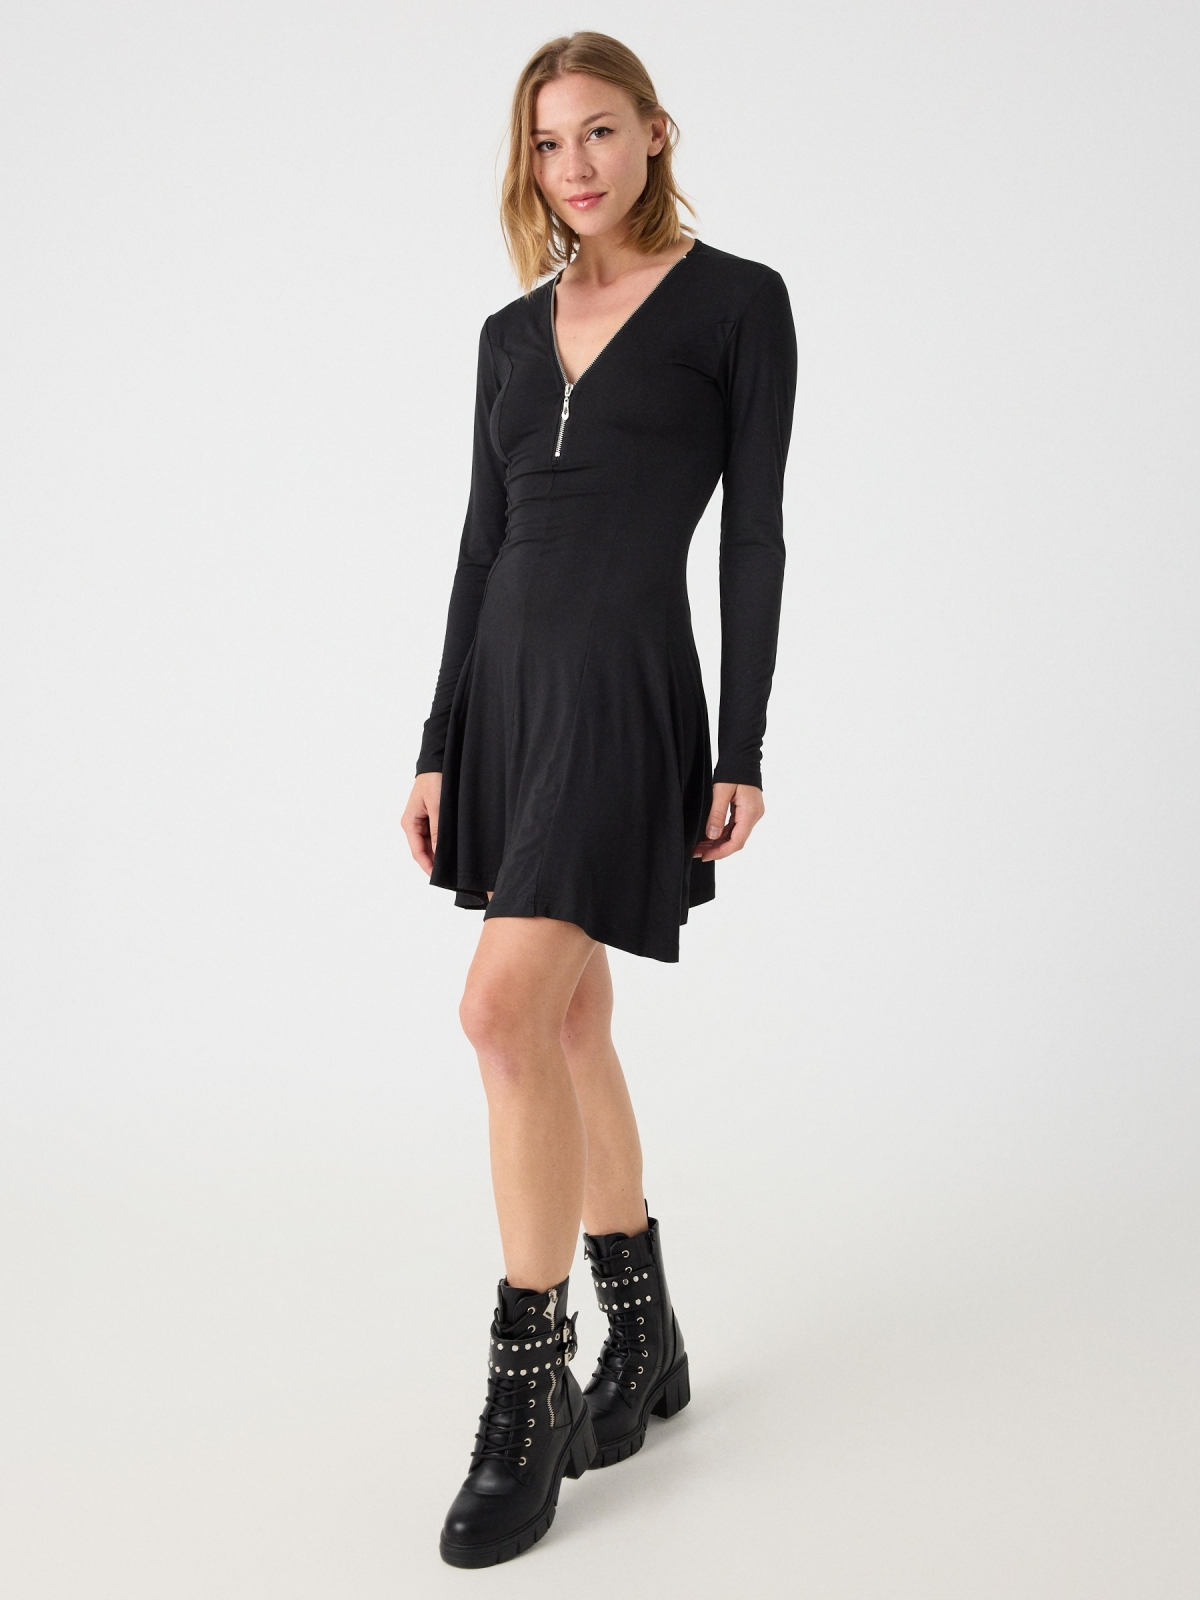 Mini dress with zipper neckline black front view